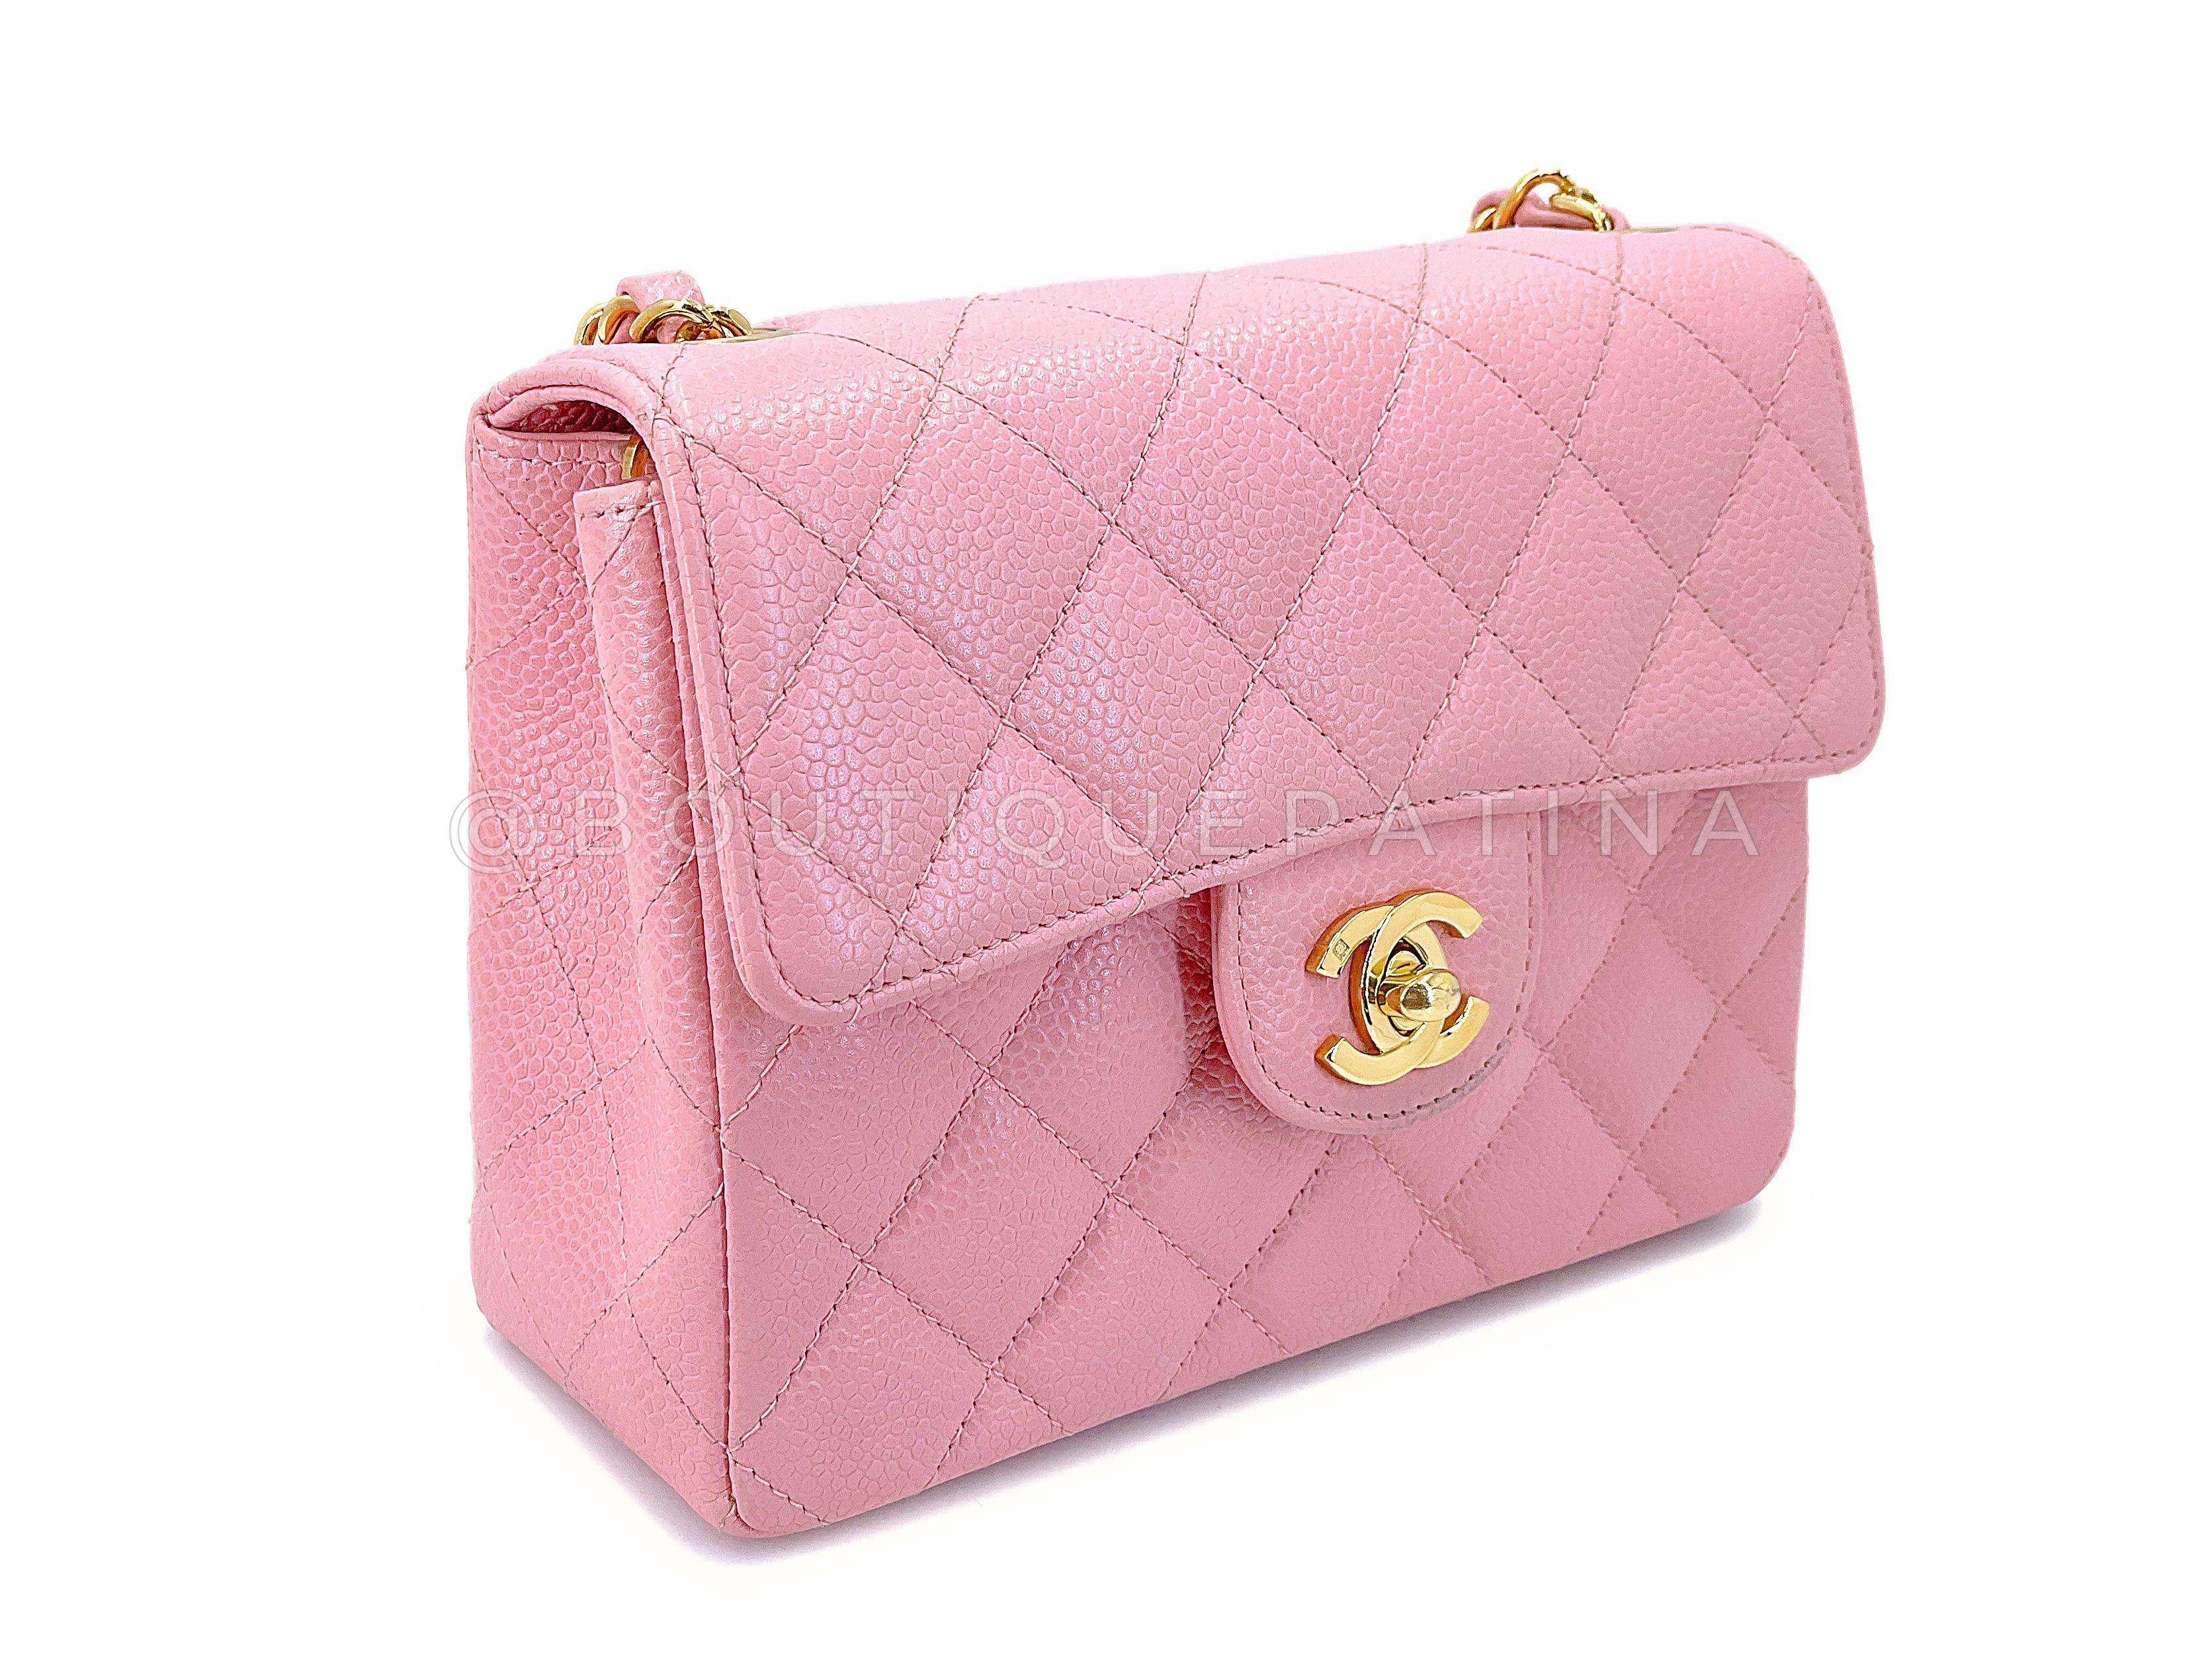 Chanel 2004 Vintage Sakura Pink Square Mini Flap Bag 24k GHW 67727 Excellent état - En vente à Costa Mesa, CA